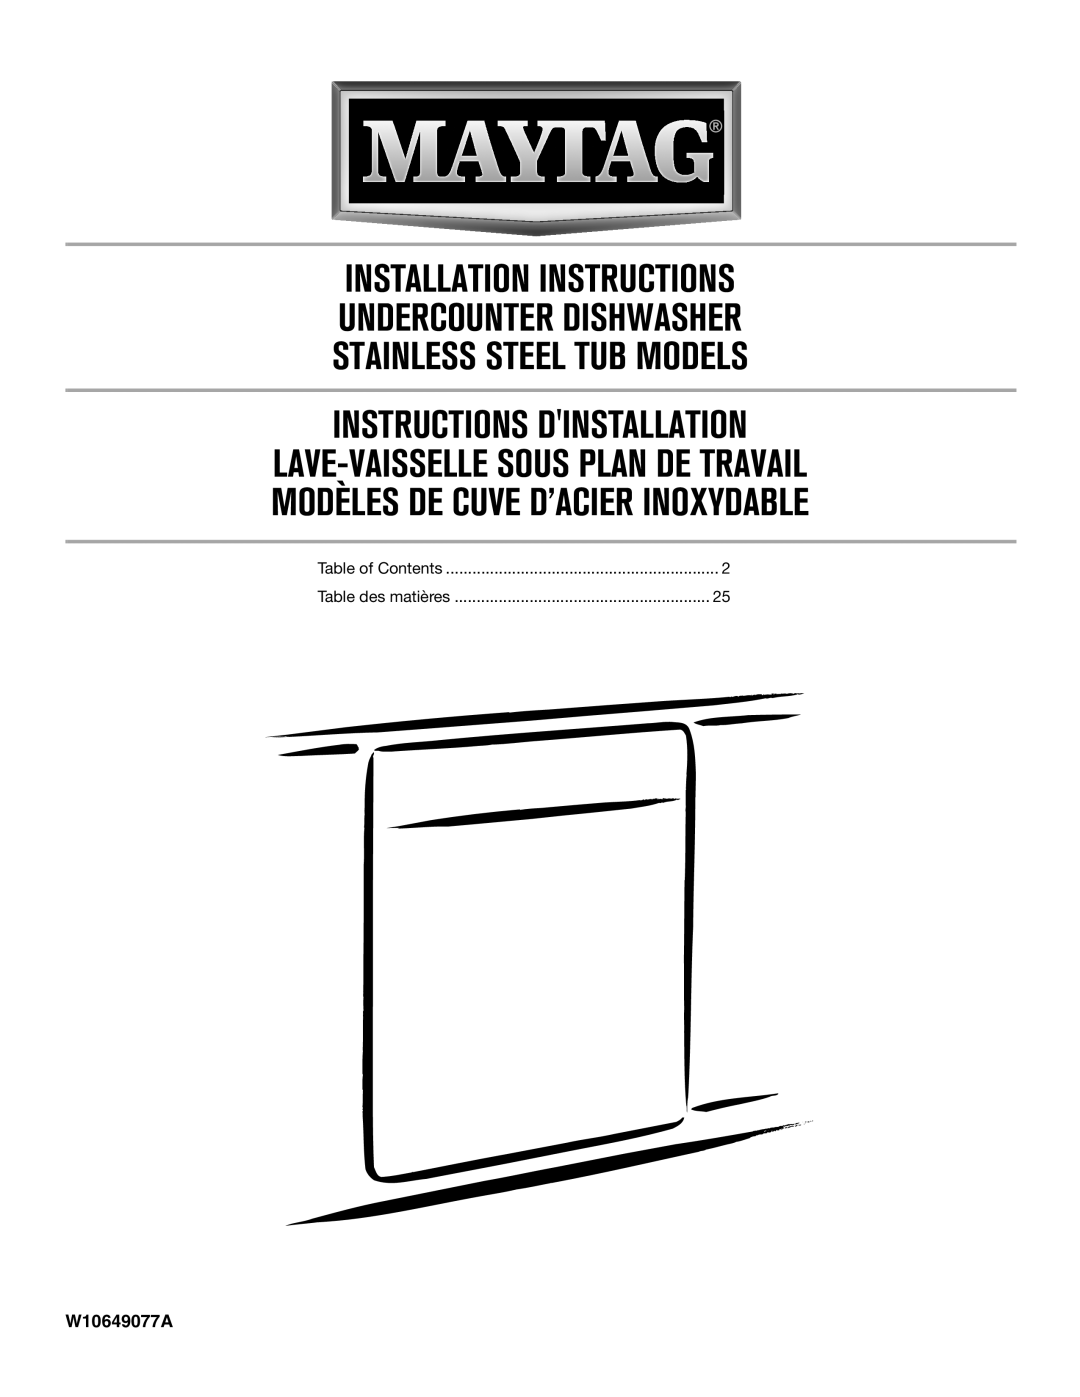 Maytag W10649077A installation instructions Instructions Dinstallation 